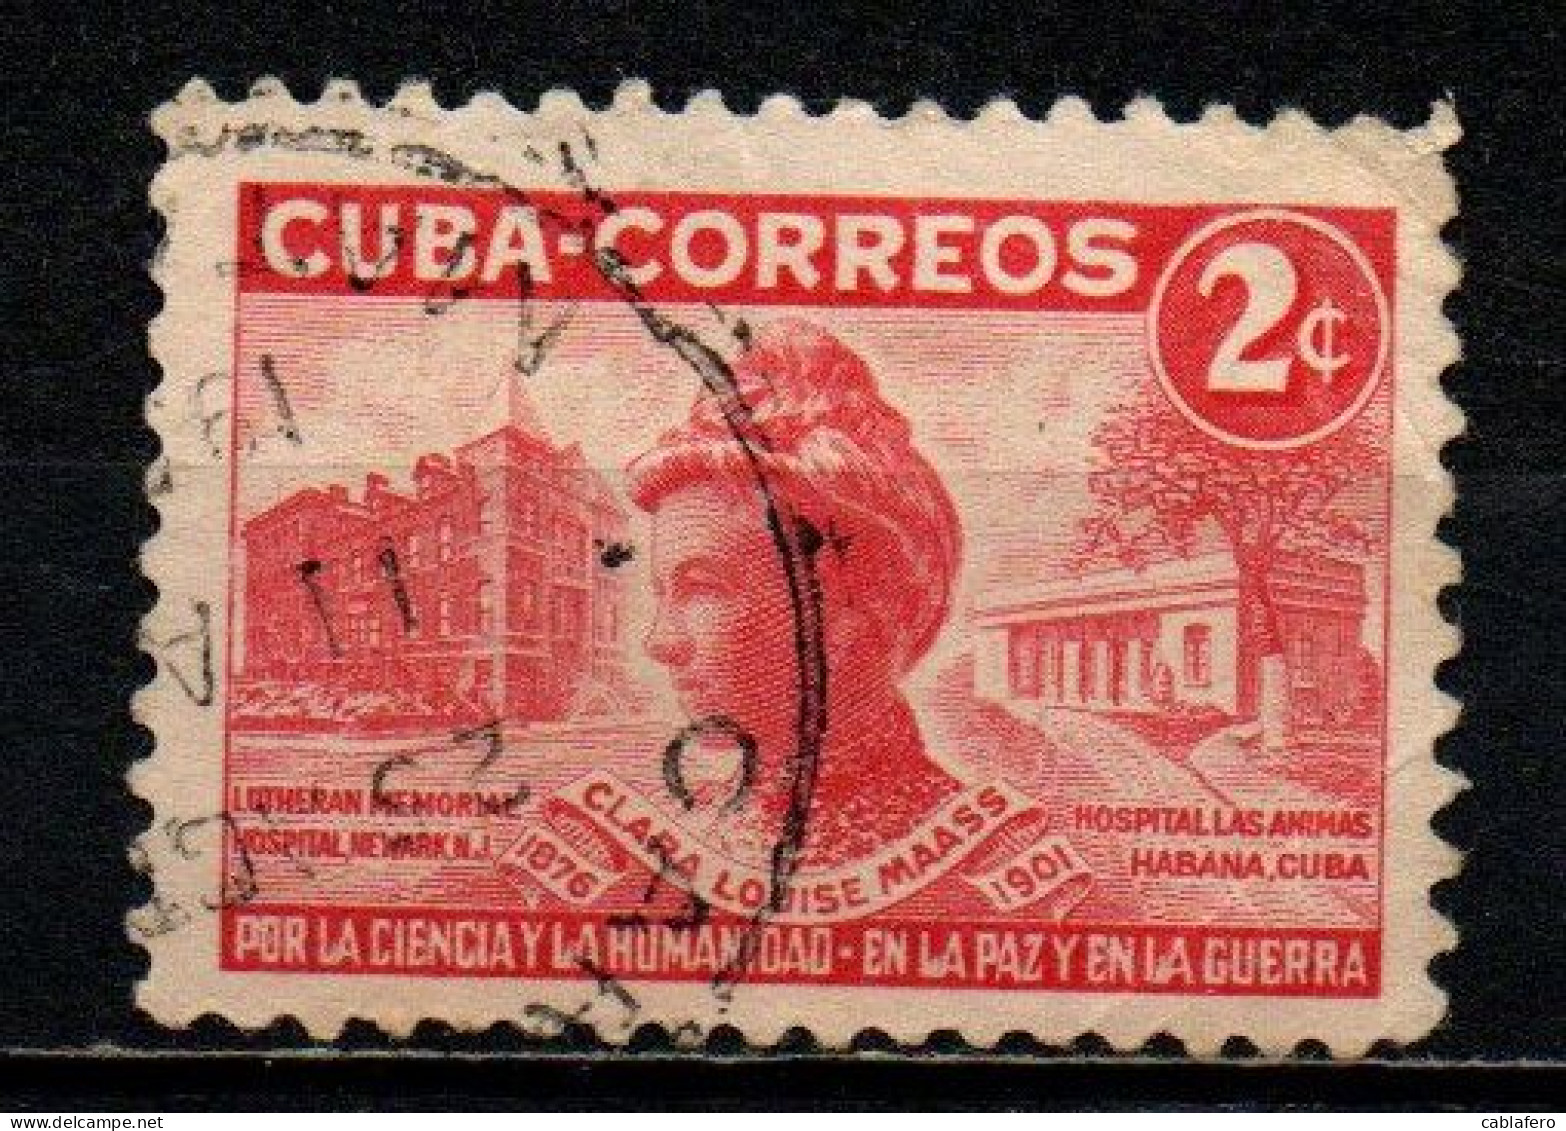 CUBA - 1951 - Hospitals: Lutheran Memorial, Newark, N.J. And Las Animas, Havana - USATO - Gebraucht